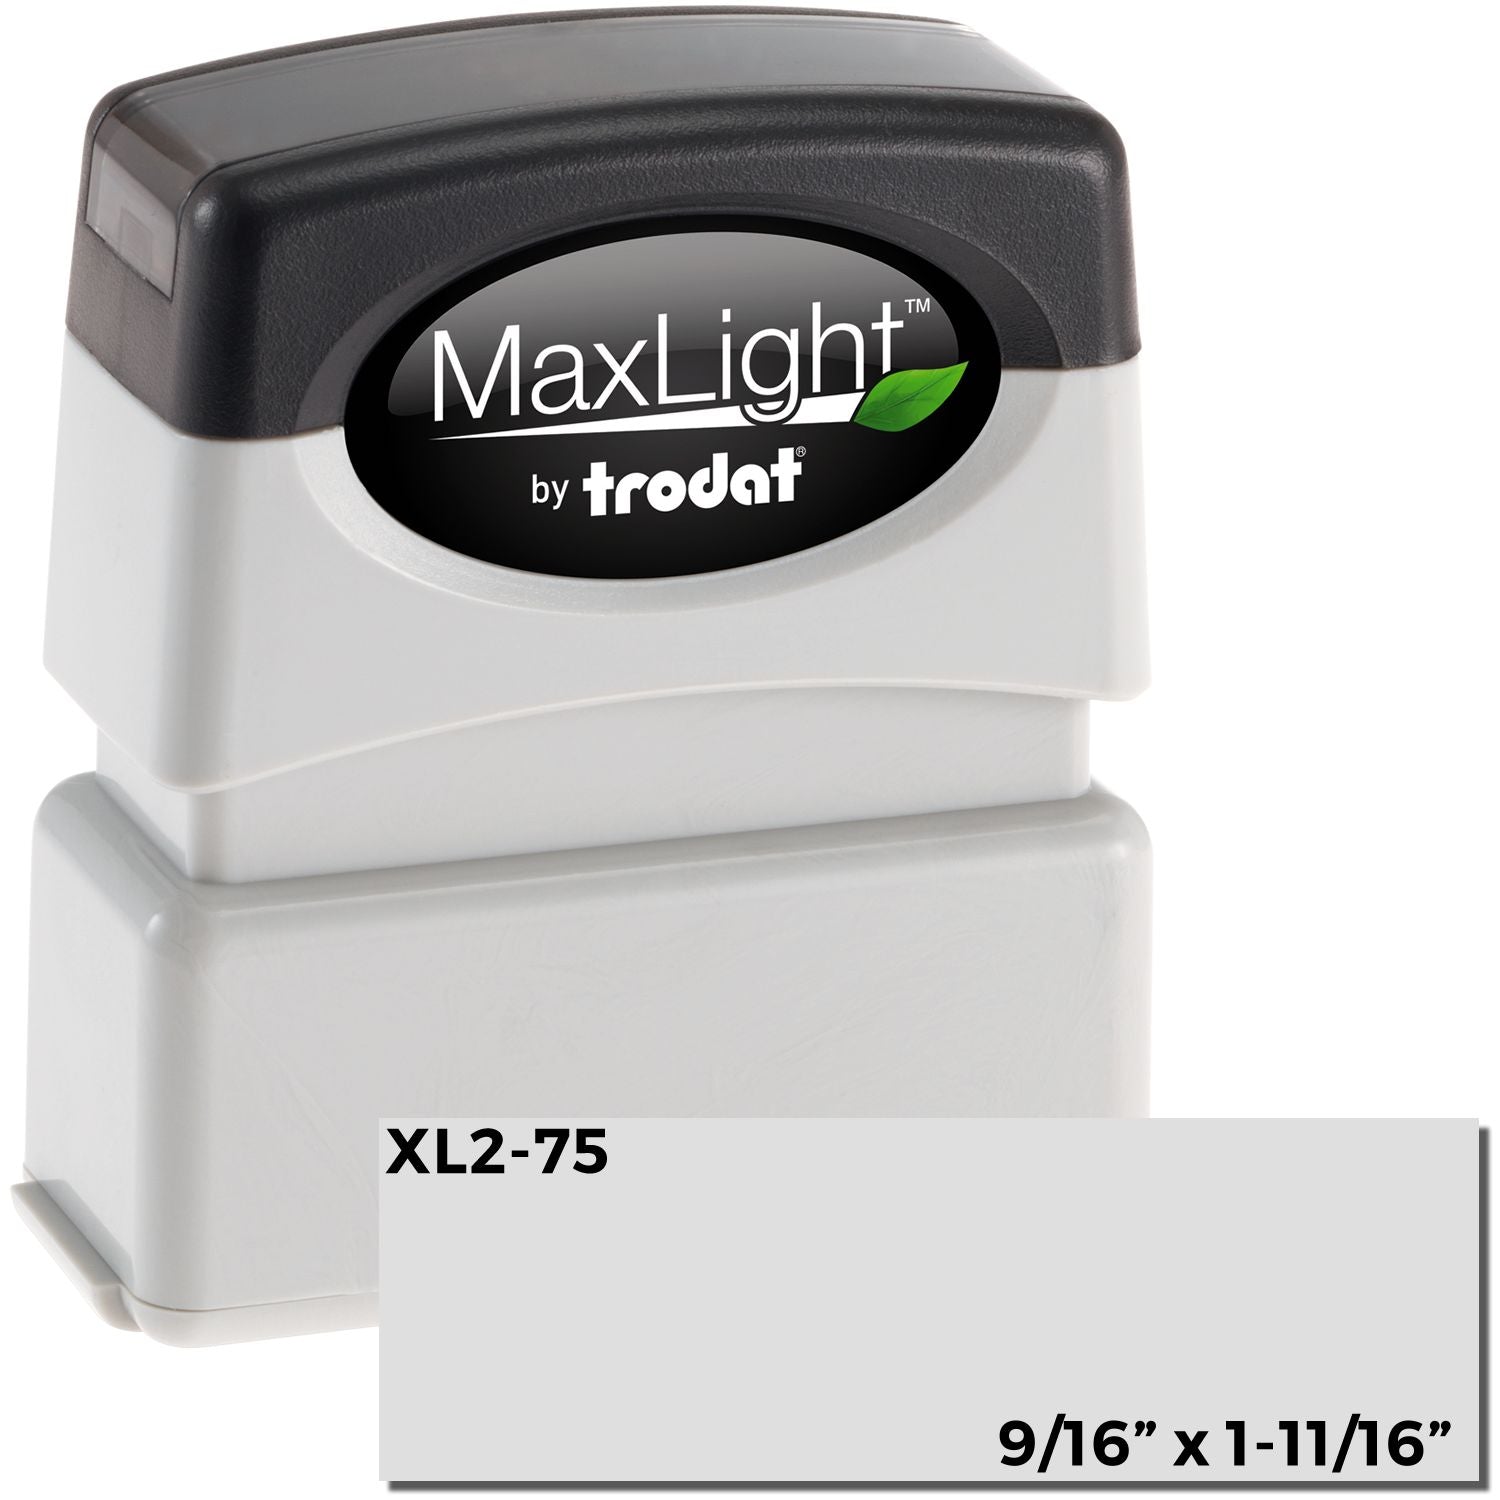 Maxlight Xl2 75 Pre Inked Stamp 1 2 X 1 11 16 Main Image